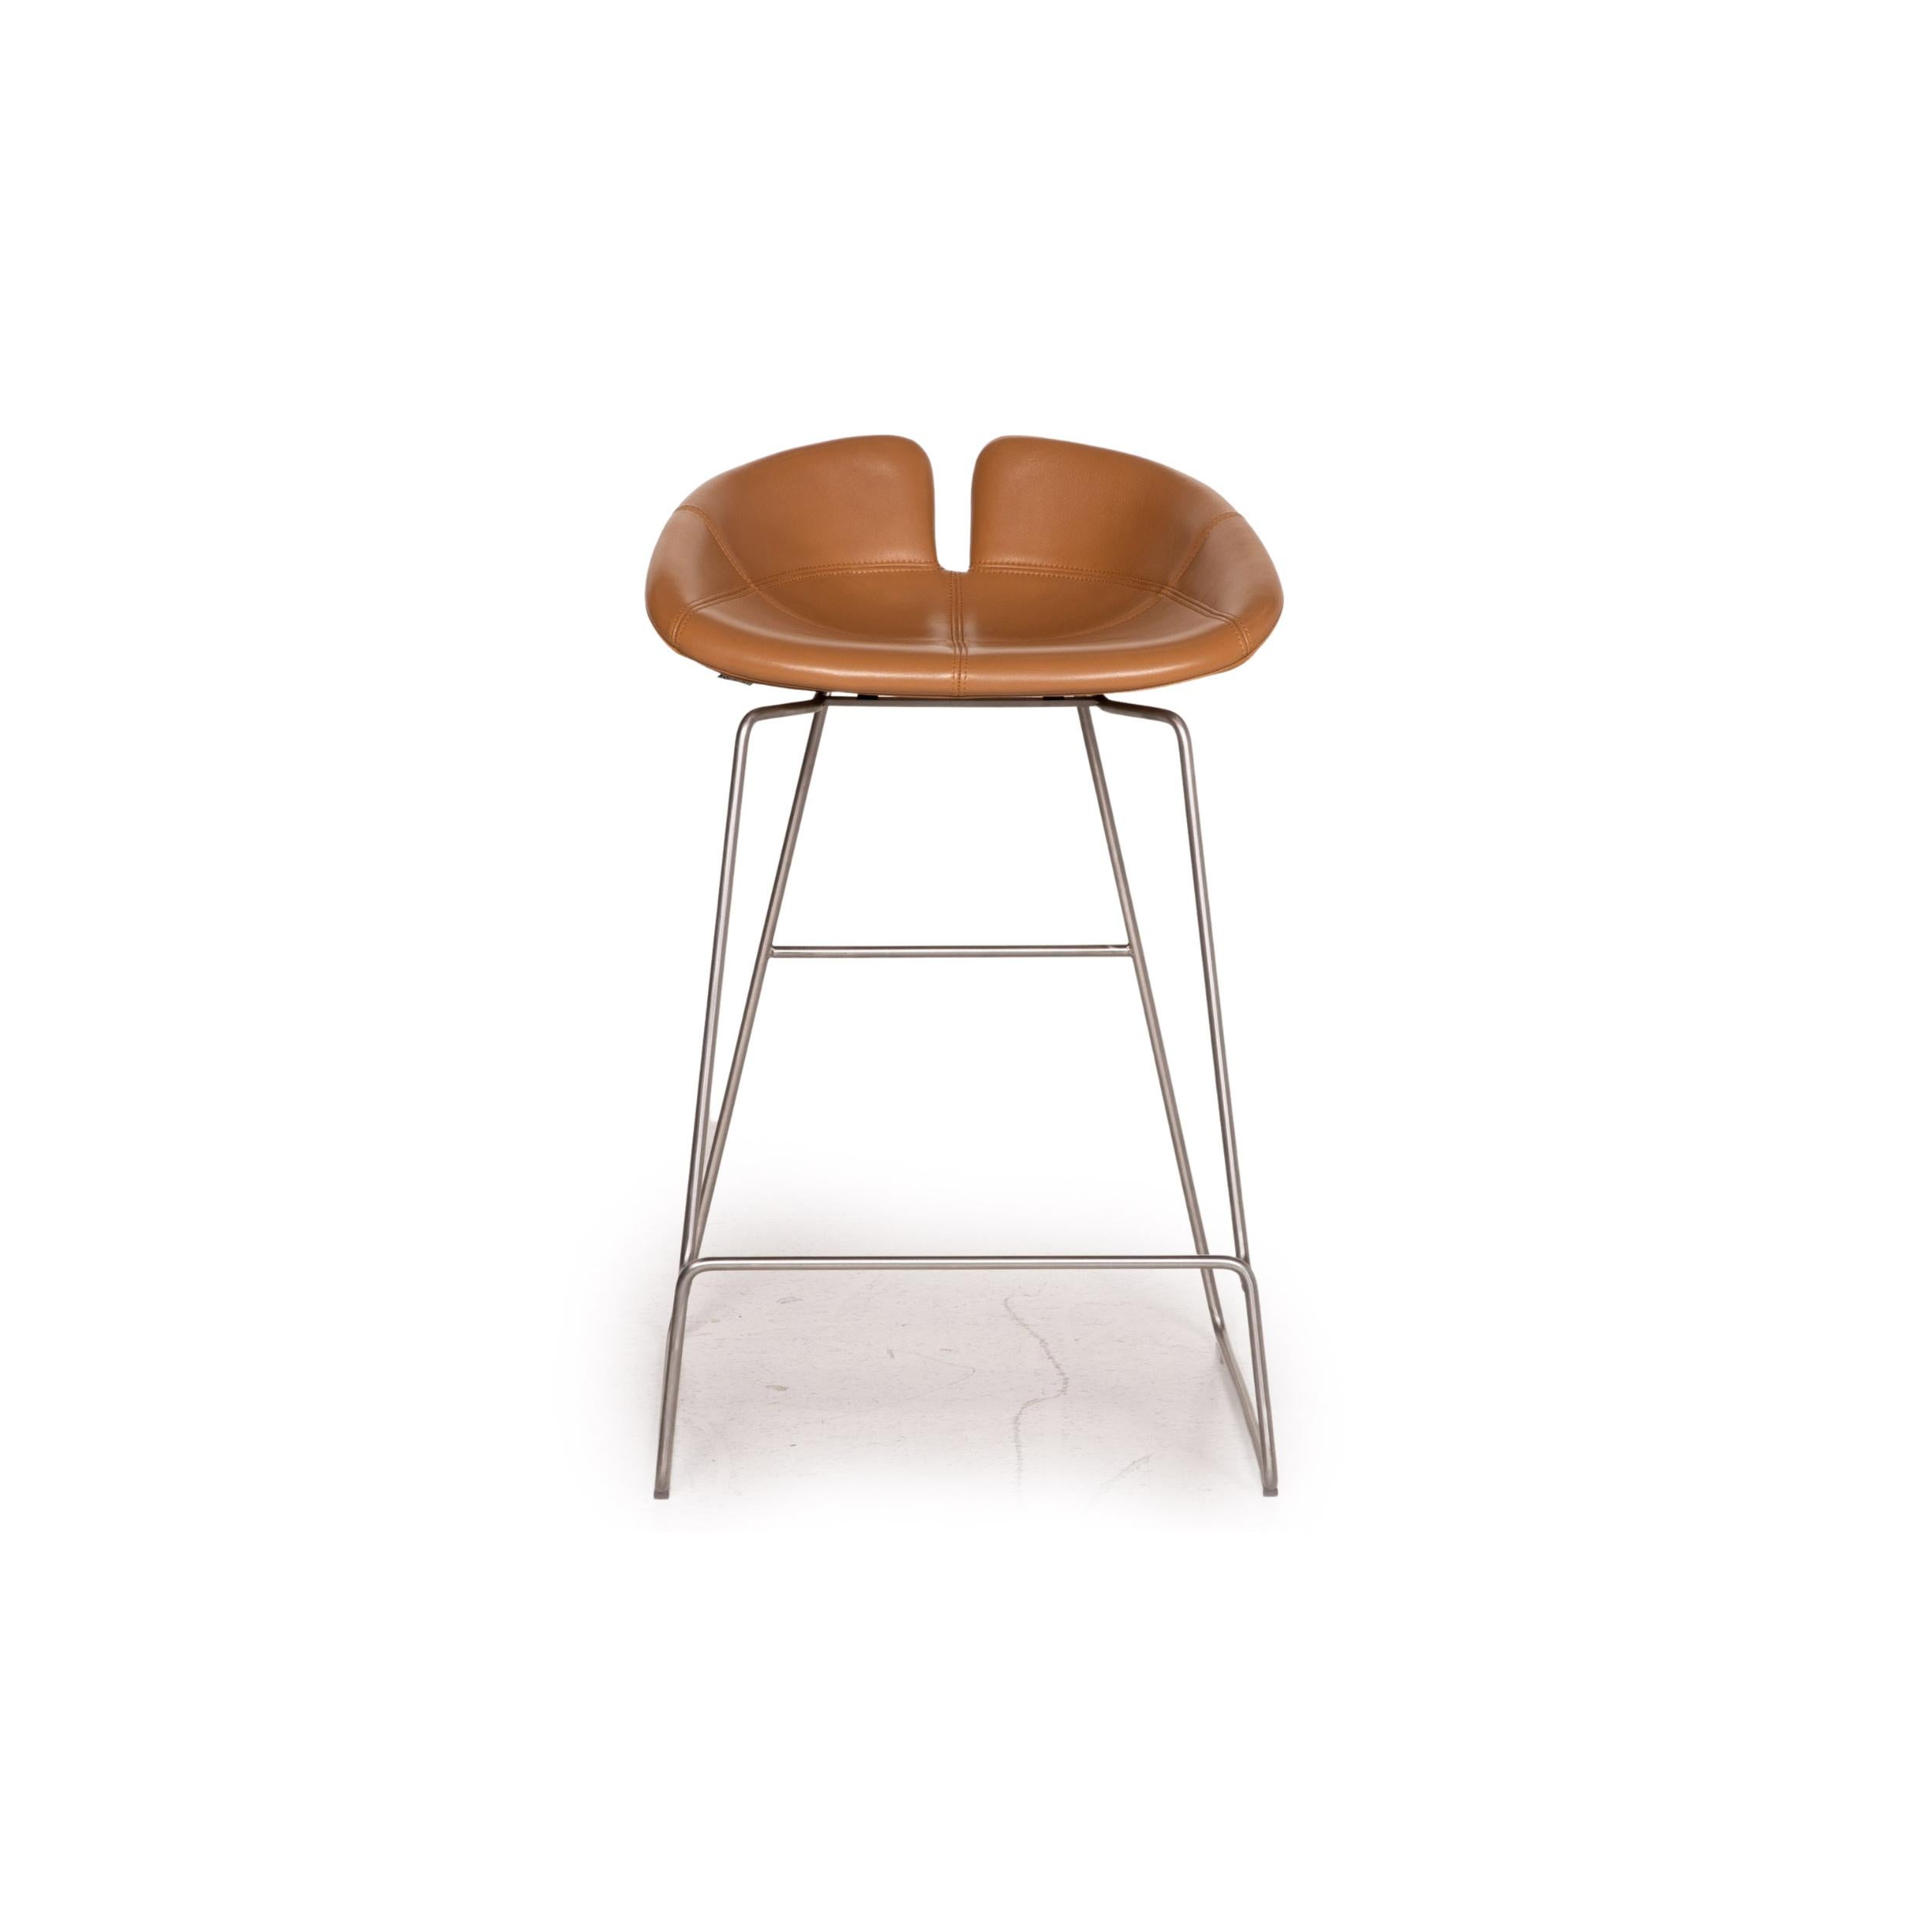 Italian Moroso Fjord Leather Bar Stool Cognac Brown Chair